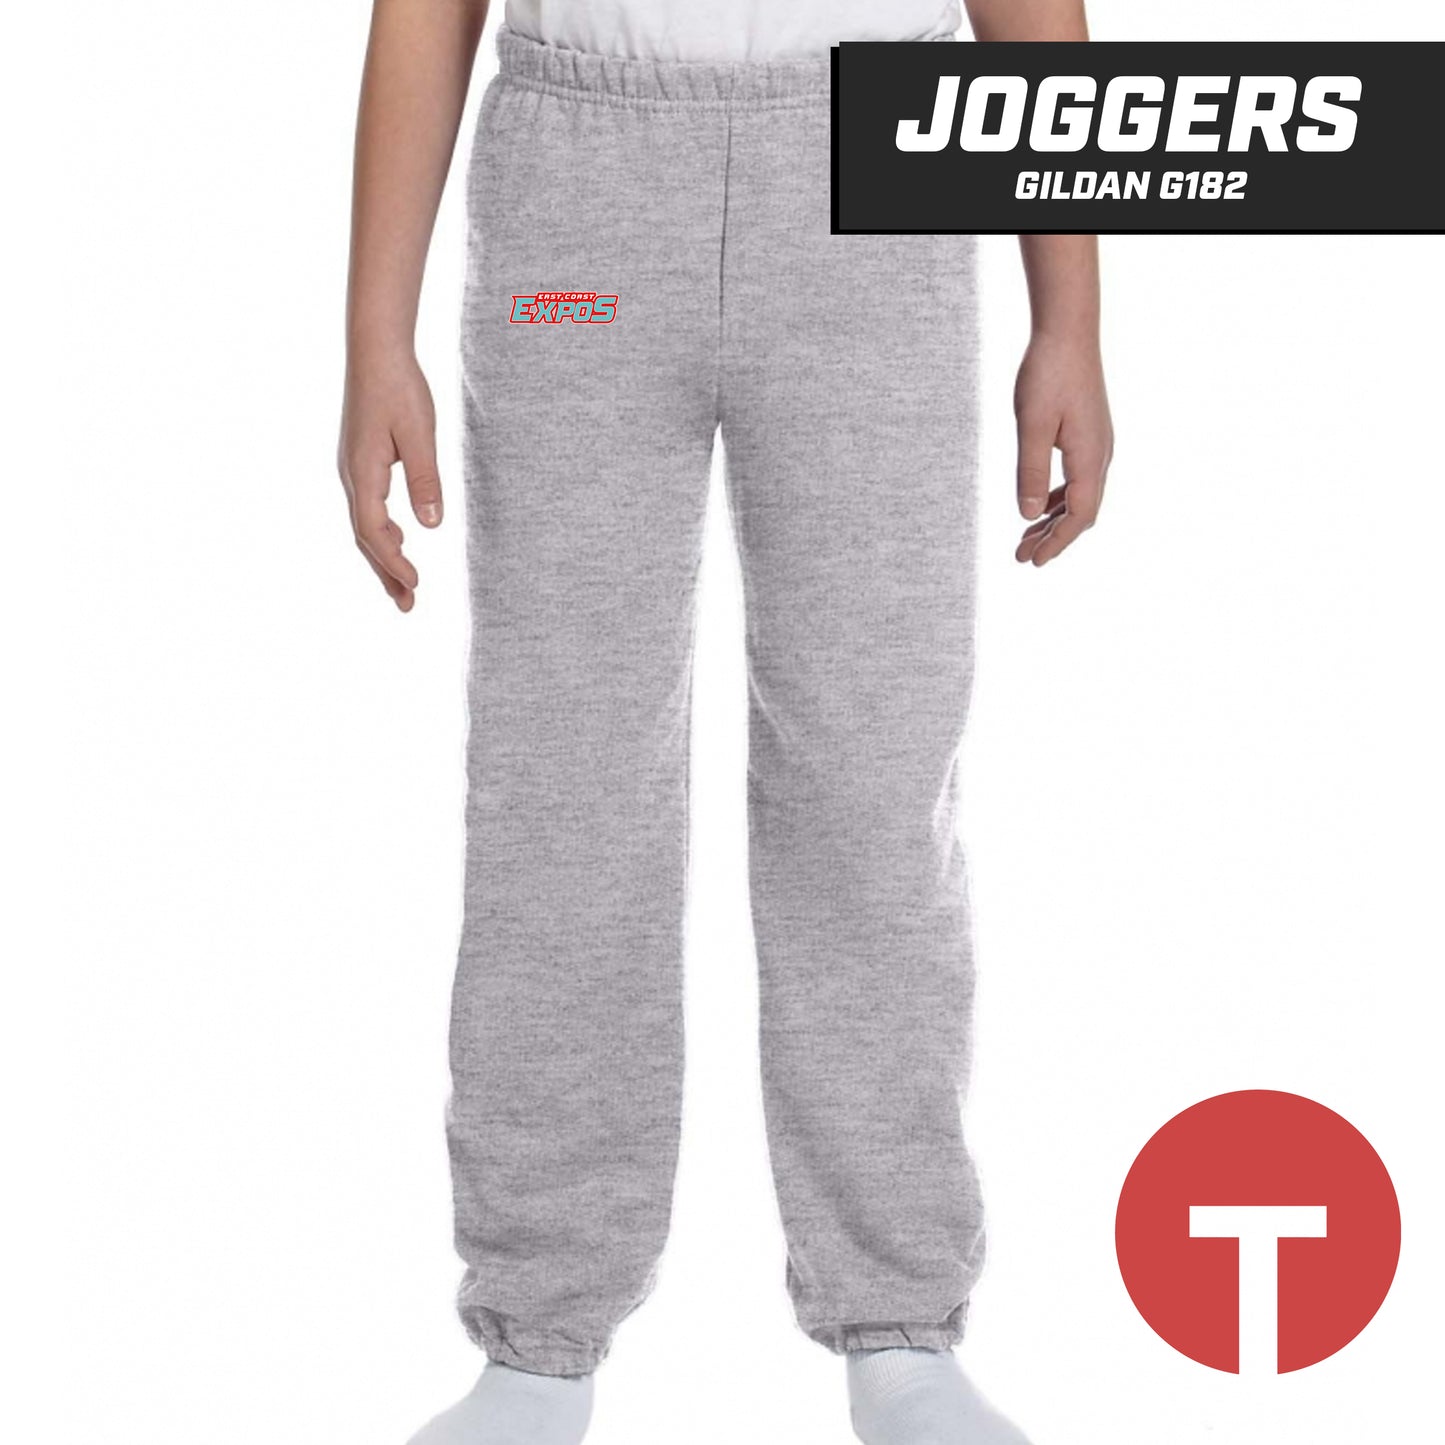 East Coast Expos - Jogger pants Gildan G182